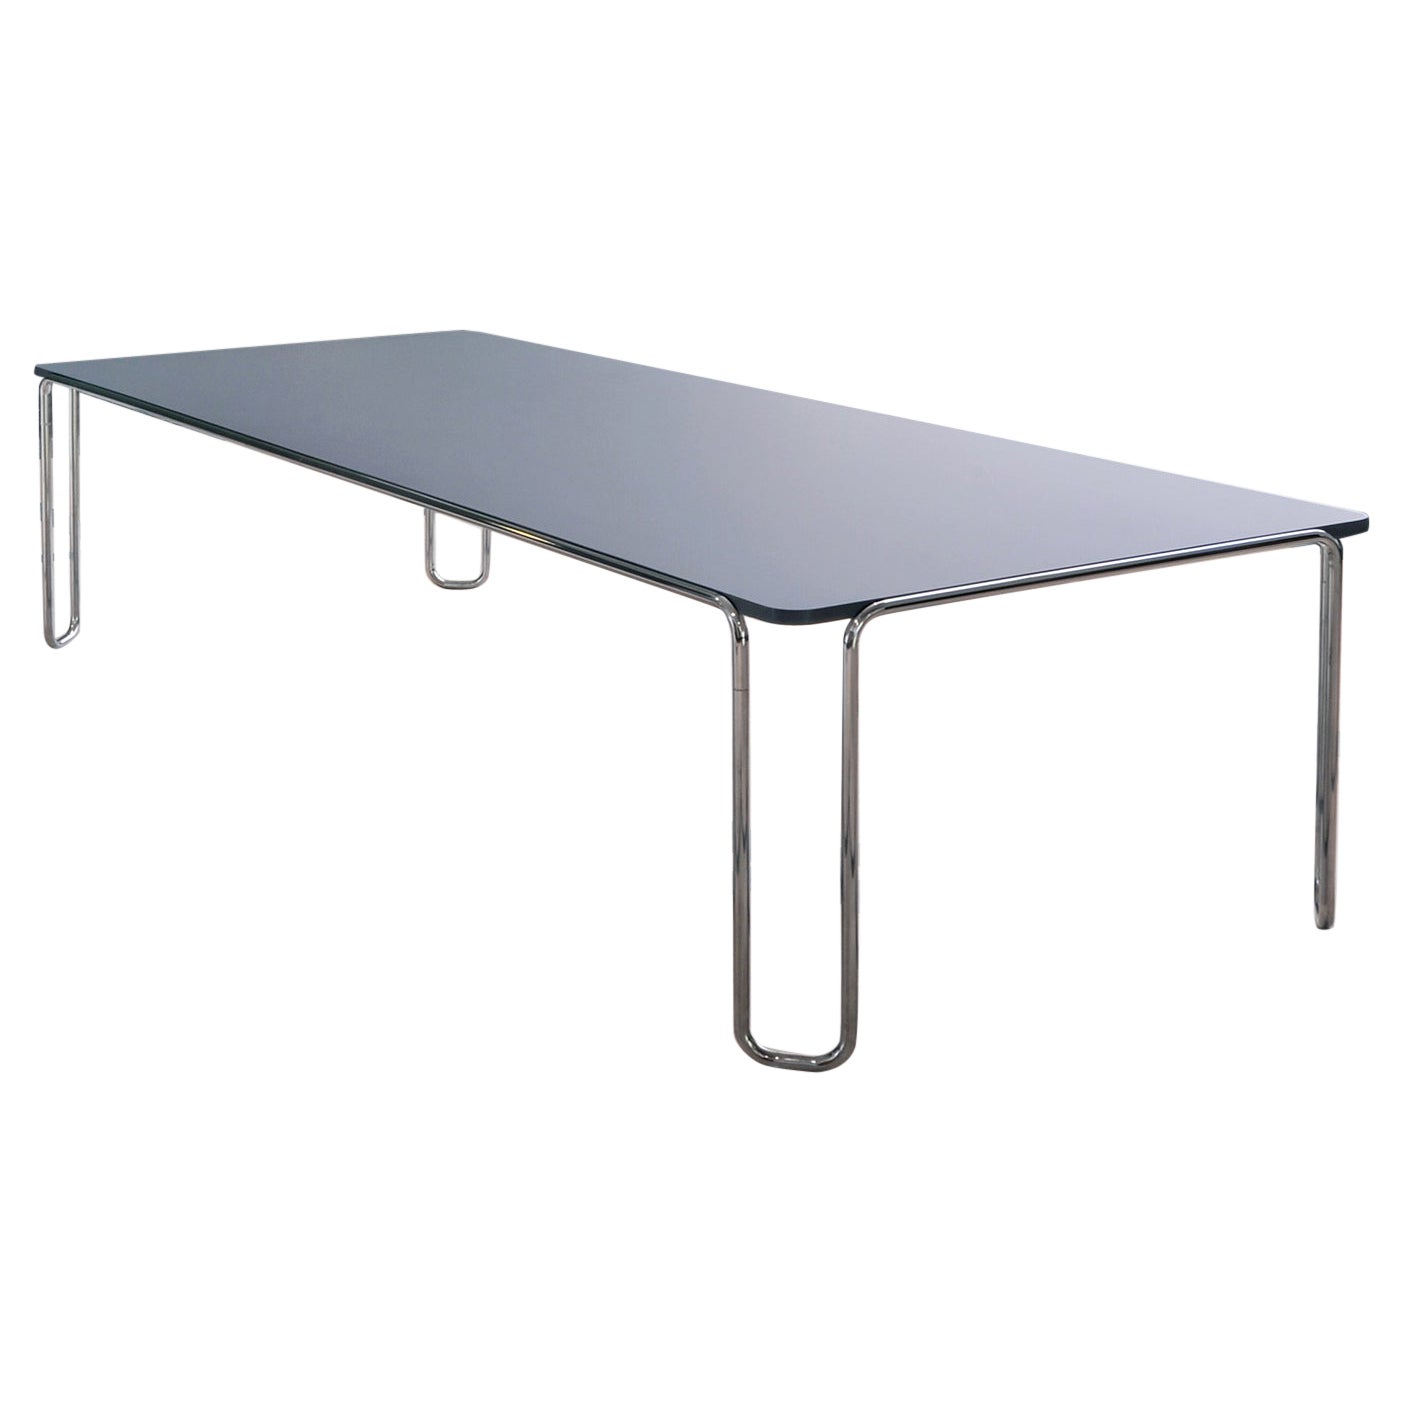 Large Modernist Custom-Made Ultra-Thin Tubular-Steel Table by GMD Berlin